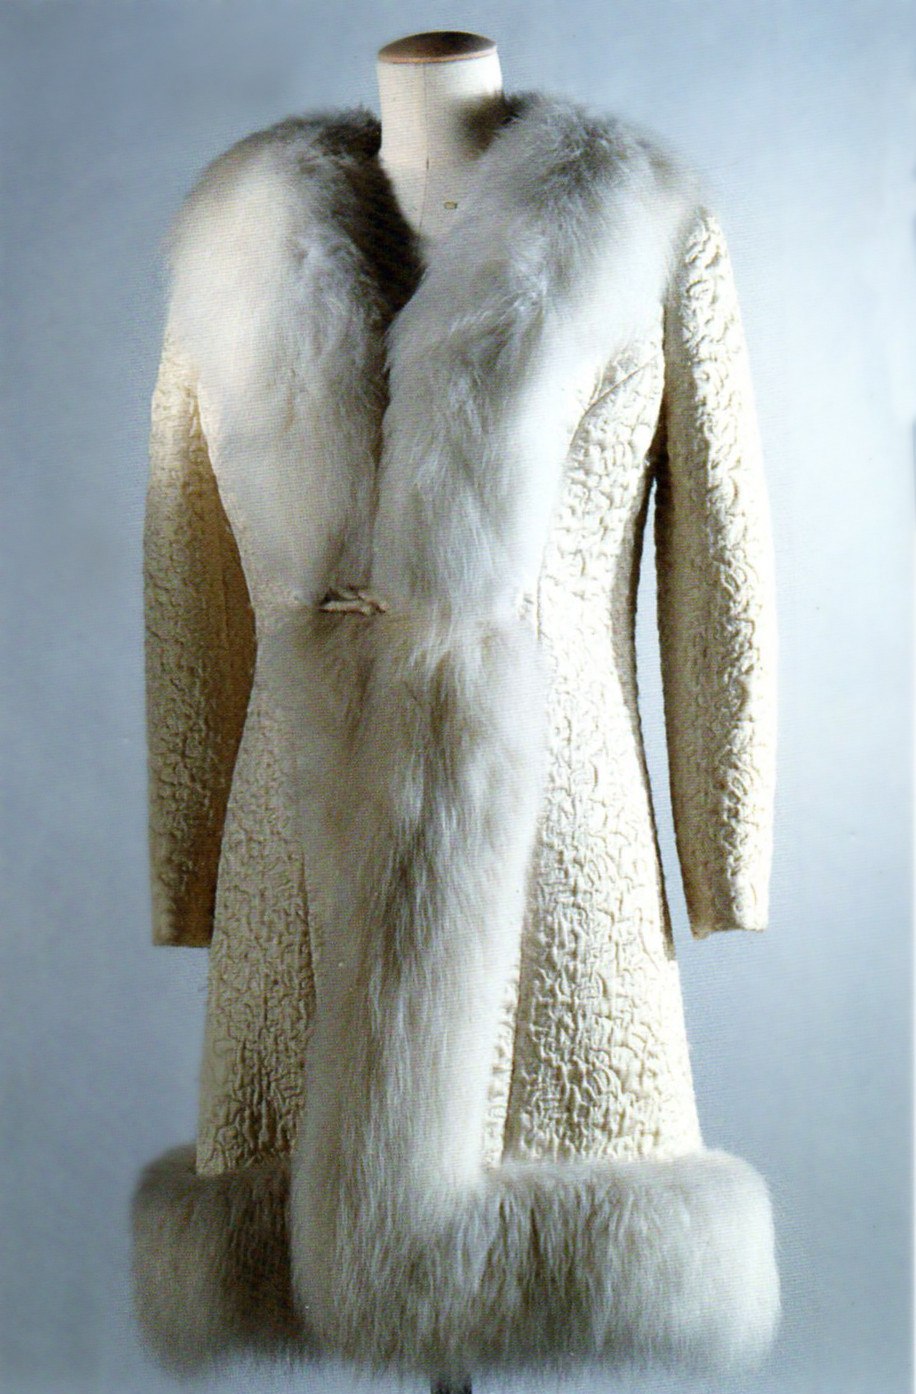 Manteau Real appartenant à Sylvie Vartan, Catherine  Deneuve et Brigitte Bardot.